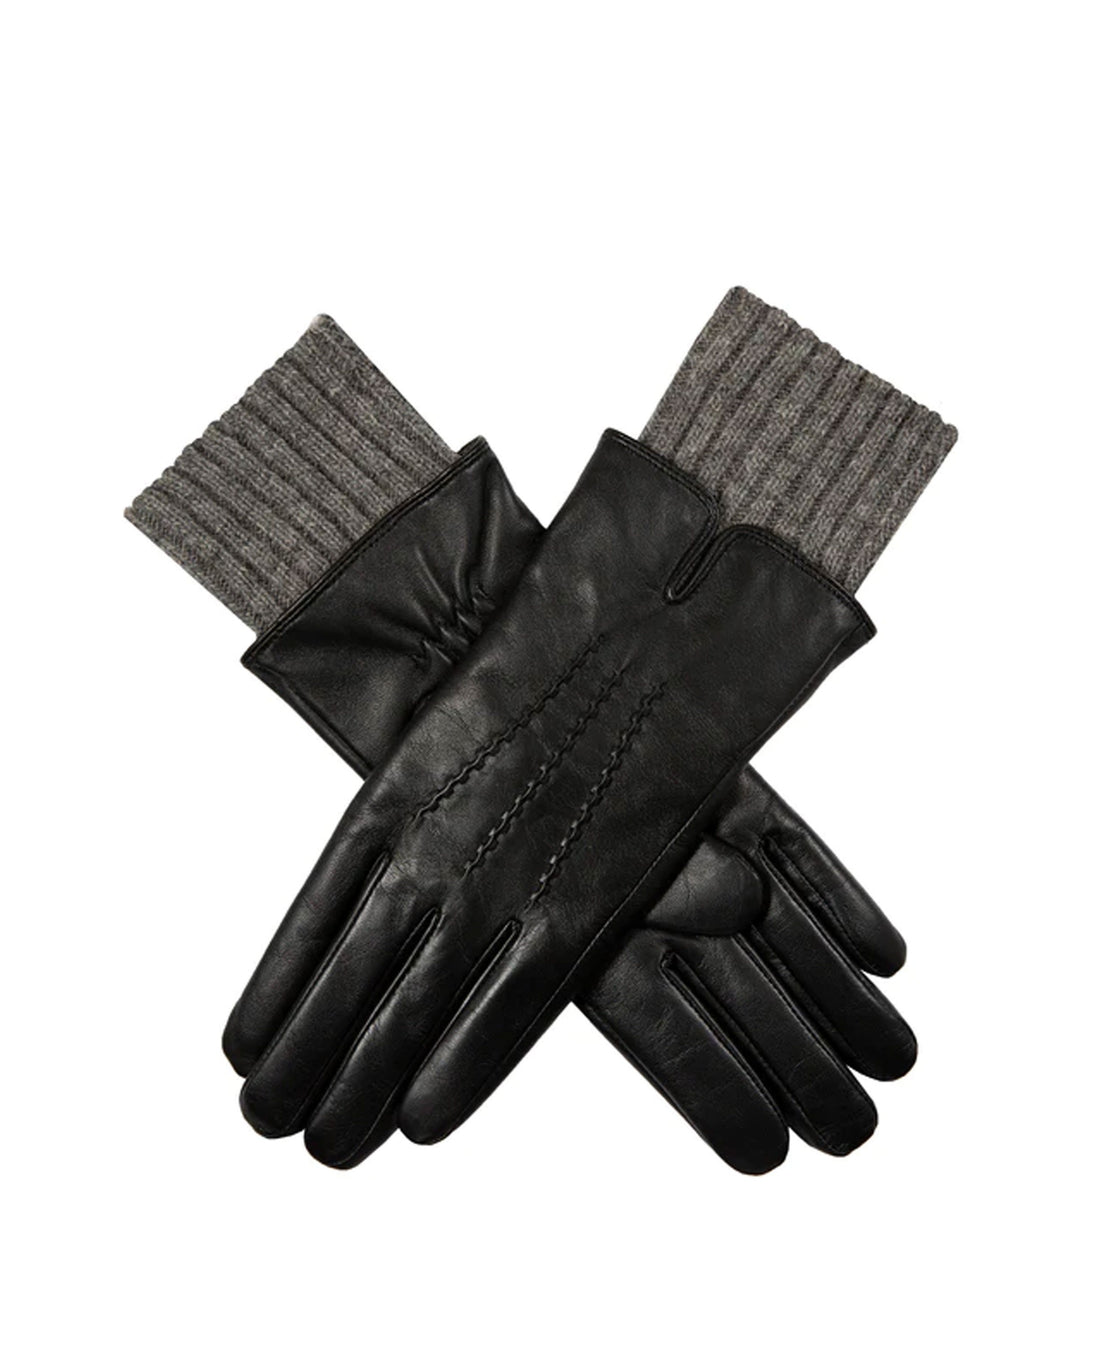 Tamara Hairsheep Gloves - Black/Charcoal